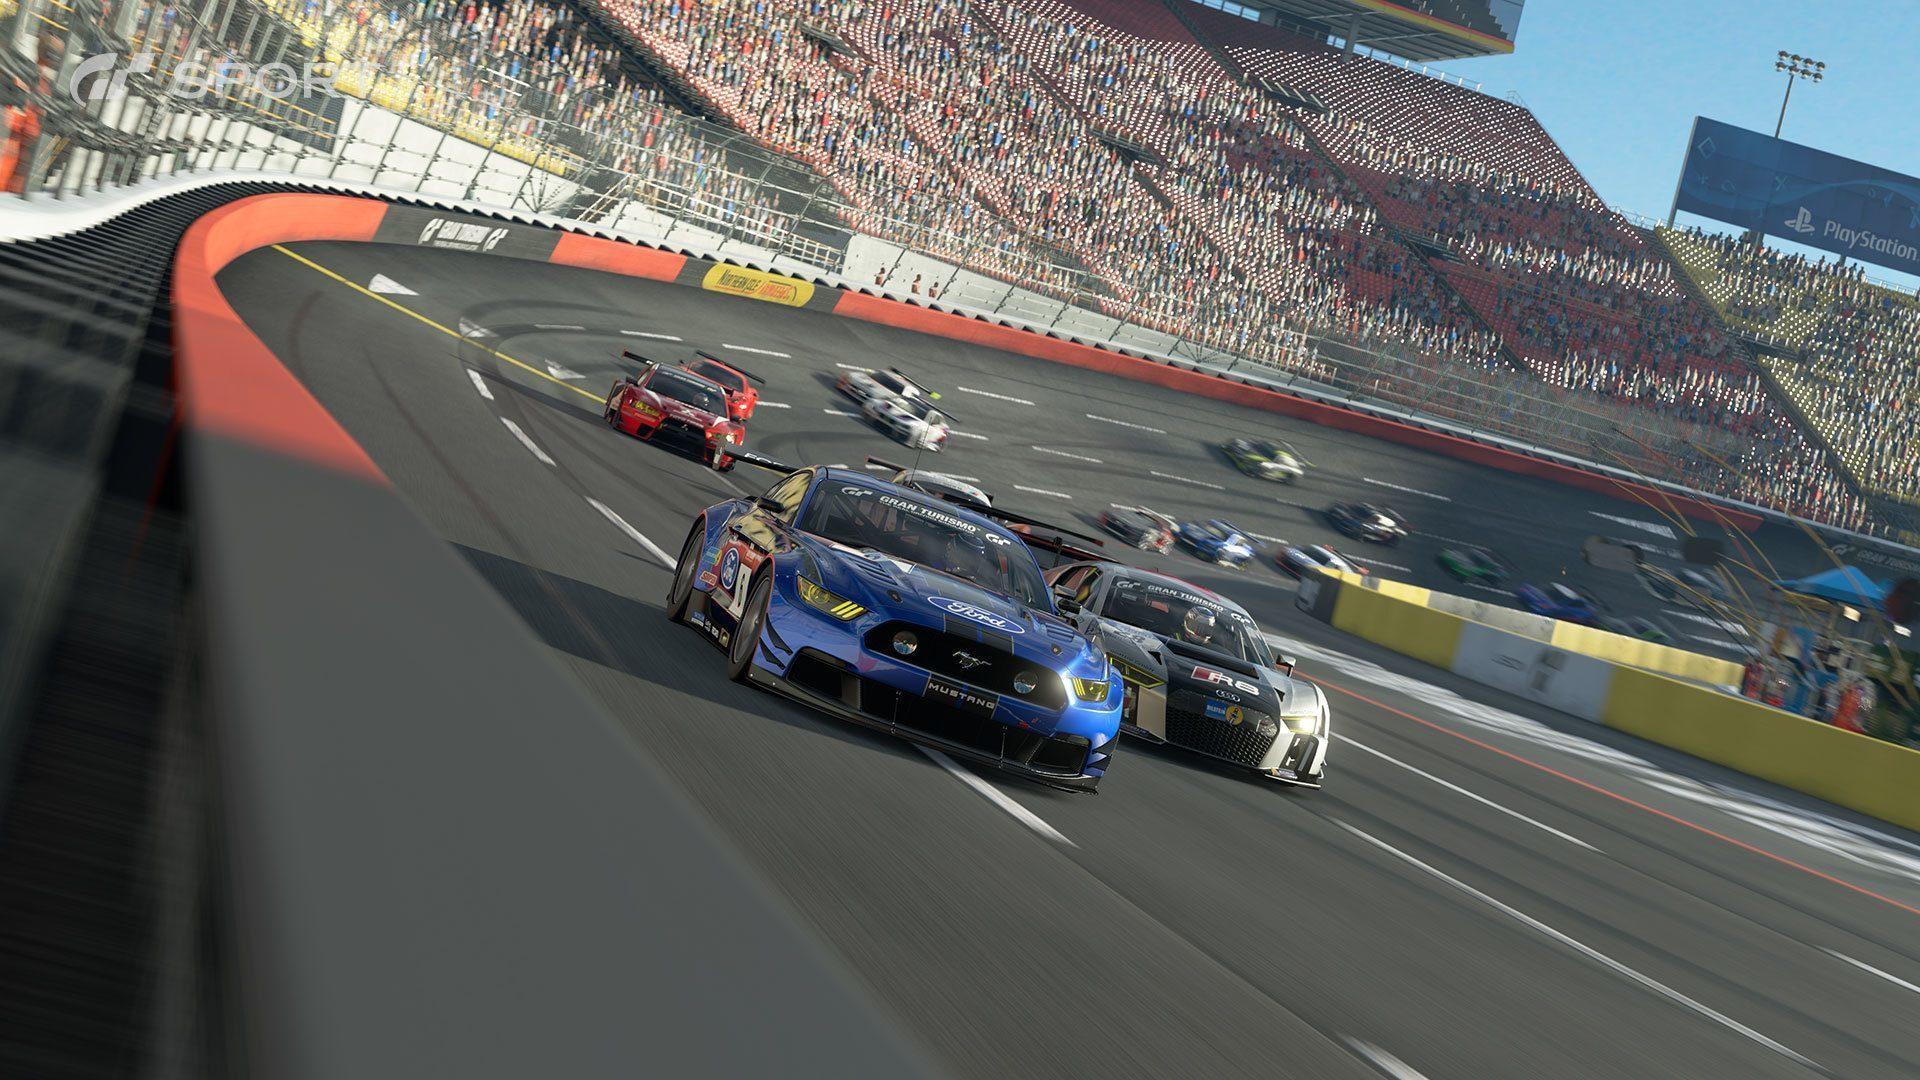 Gran Turismo 7 Requires PS Plus For Online Multiplayer